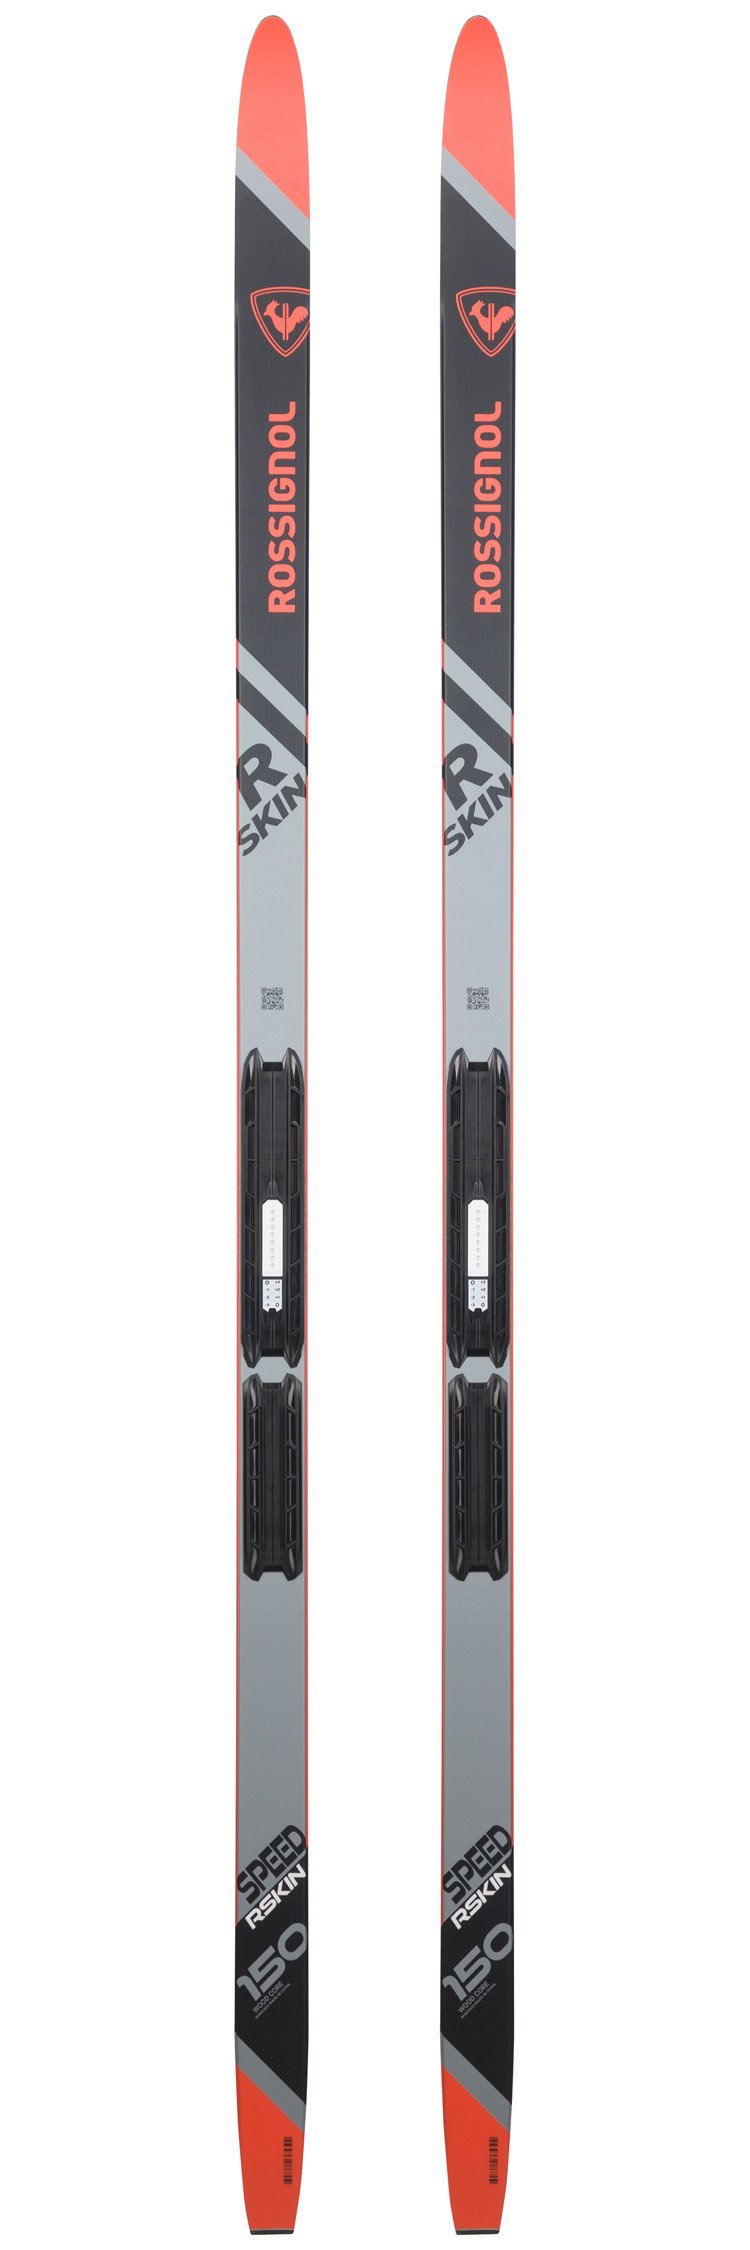 Cera universal VOLA 500 g esquí snowboard